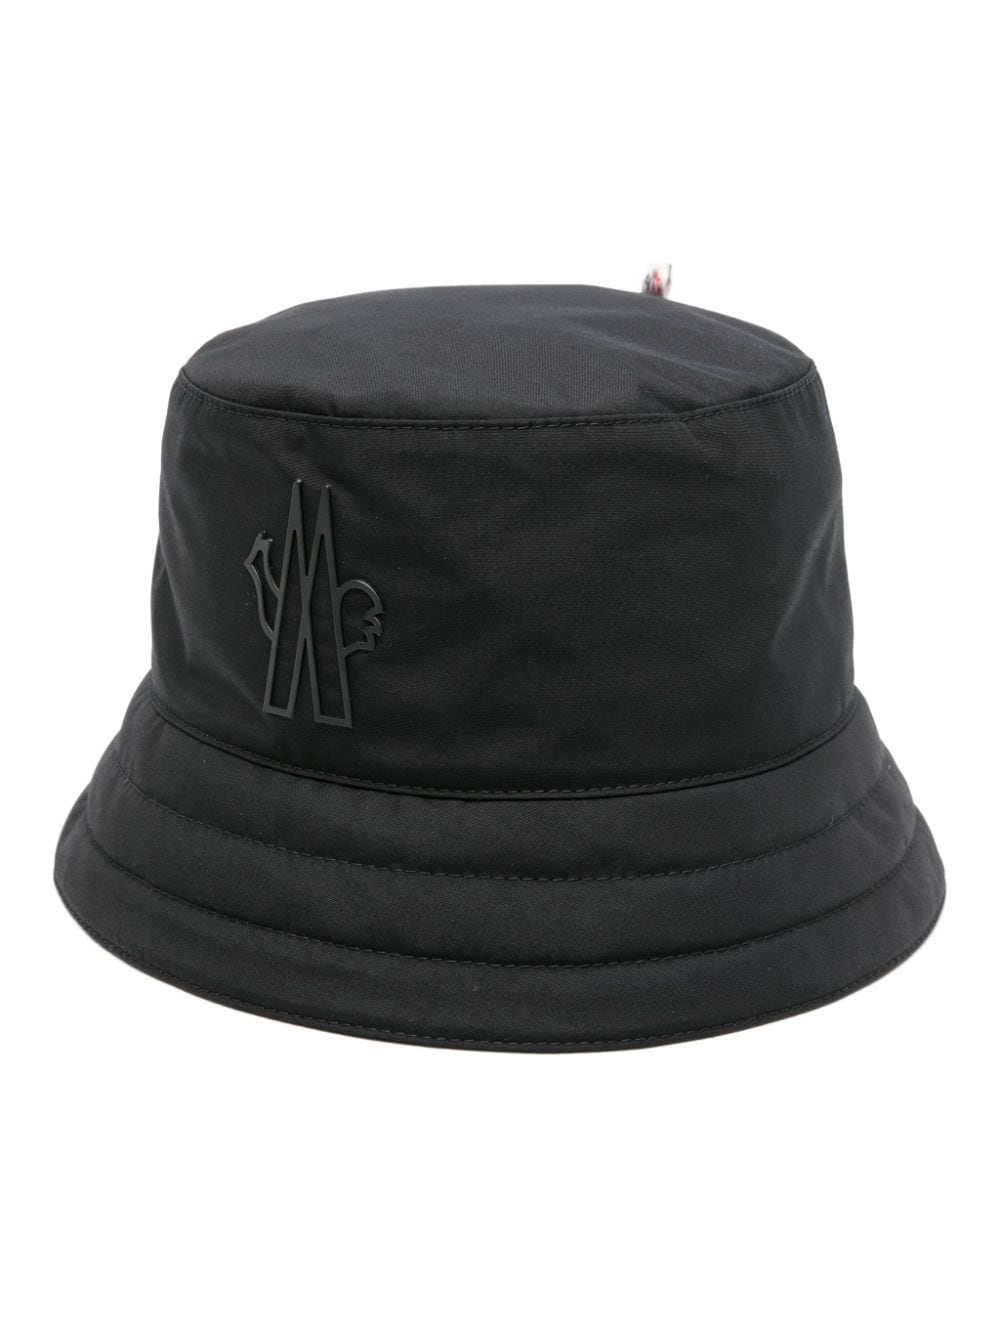 Cappello bucket con logo applicato<br><br><br>